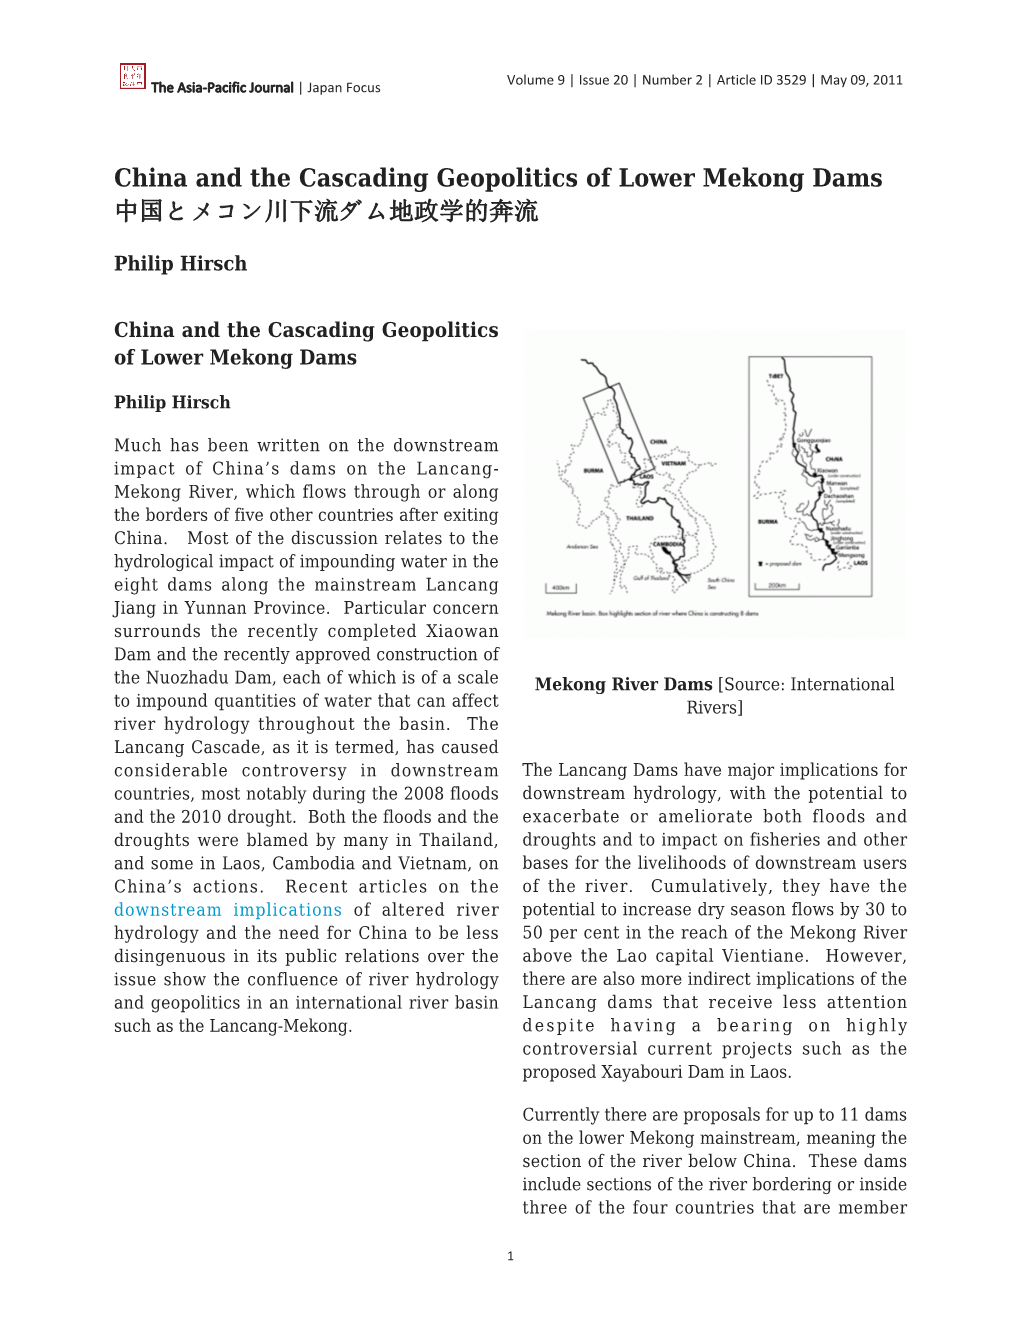 China and the Cascading Geopolitics of Lower Mekong Dams 中国とメコン川下流ダム地政学的奔流